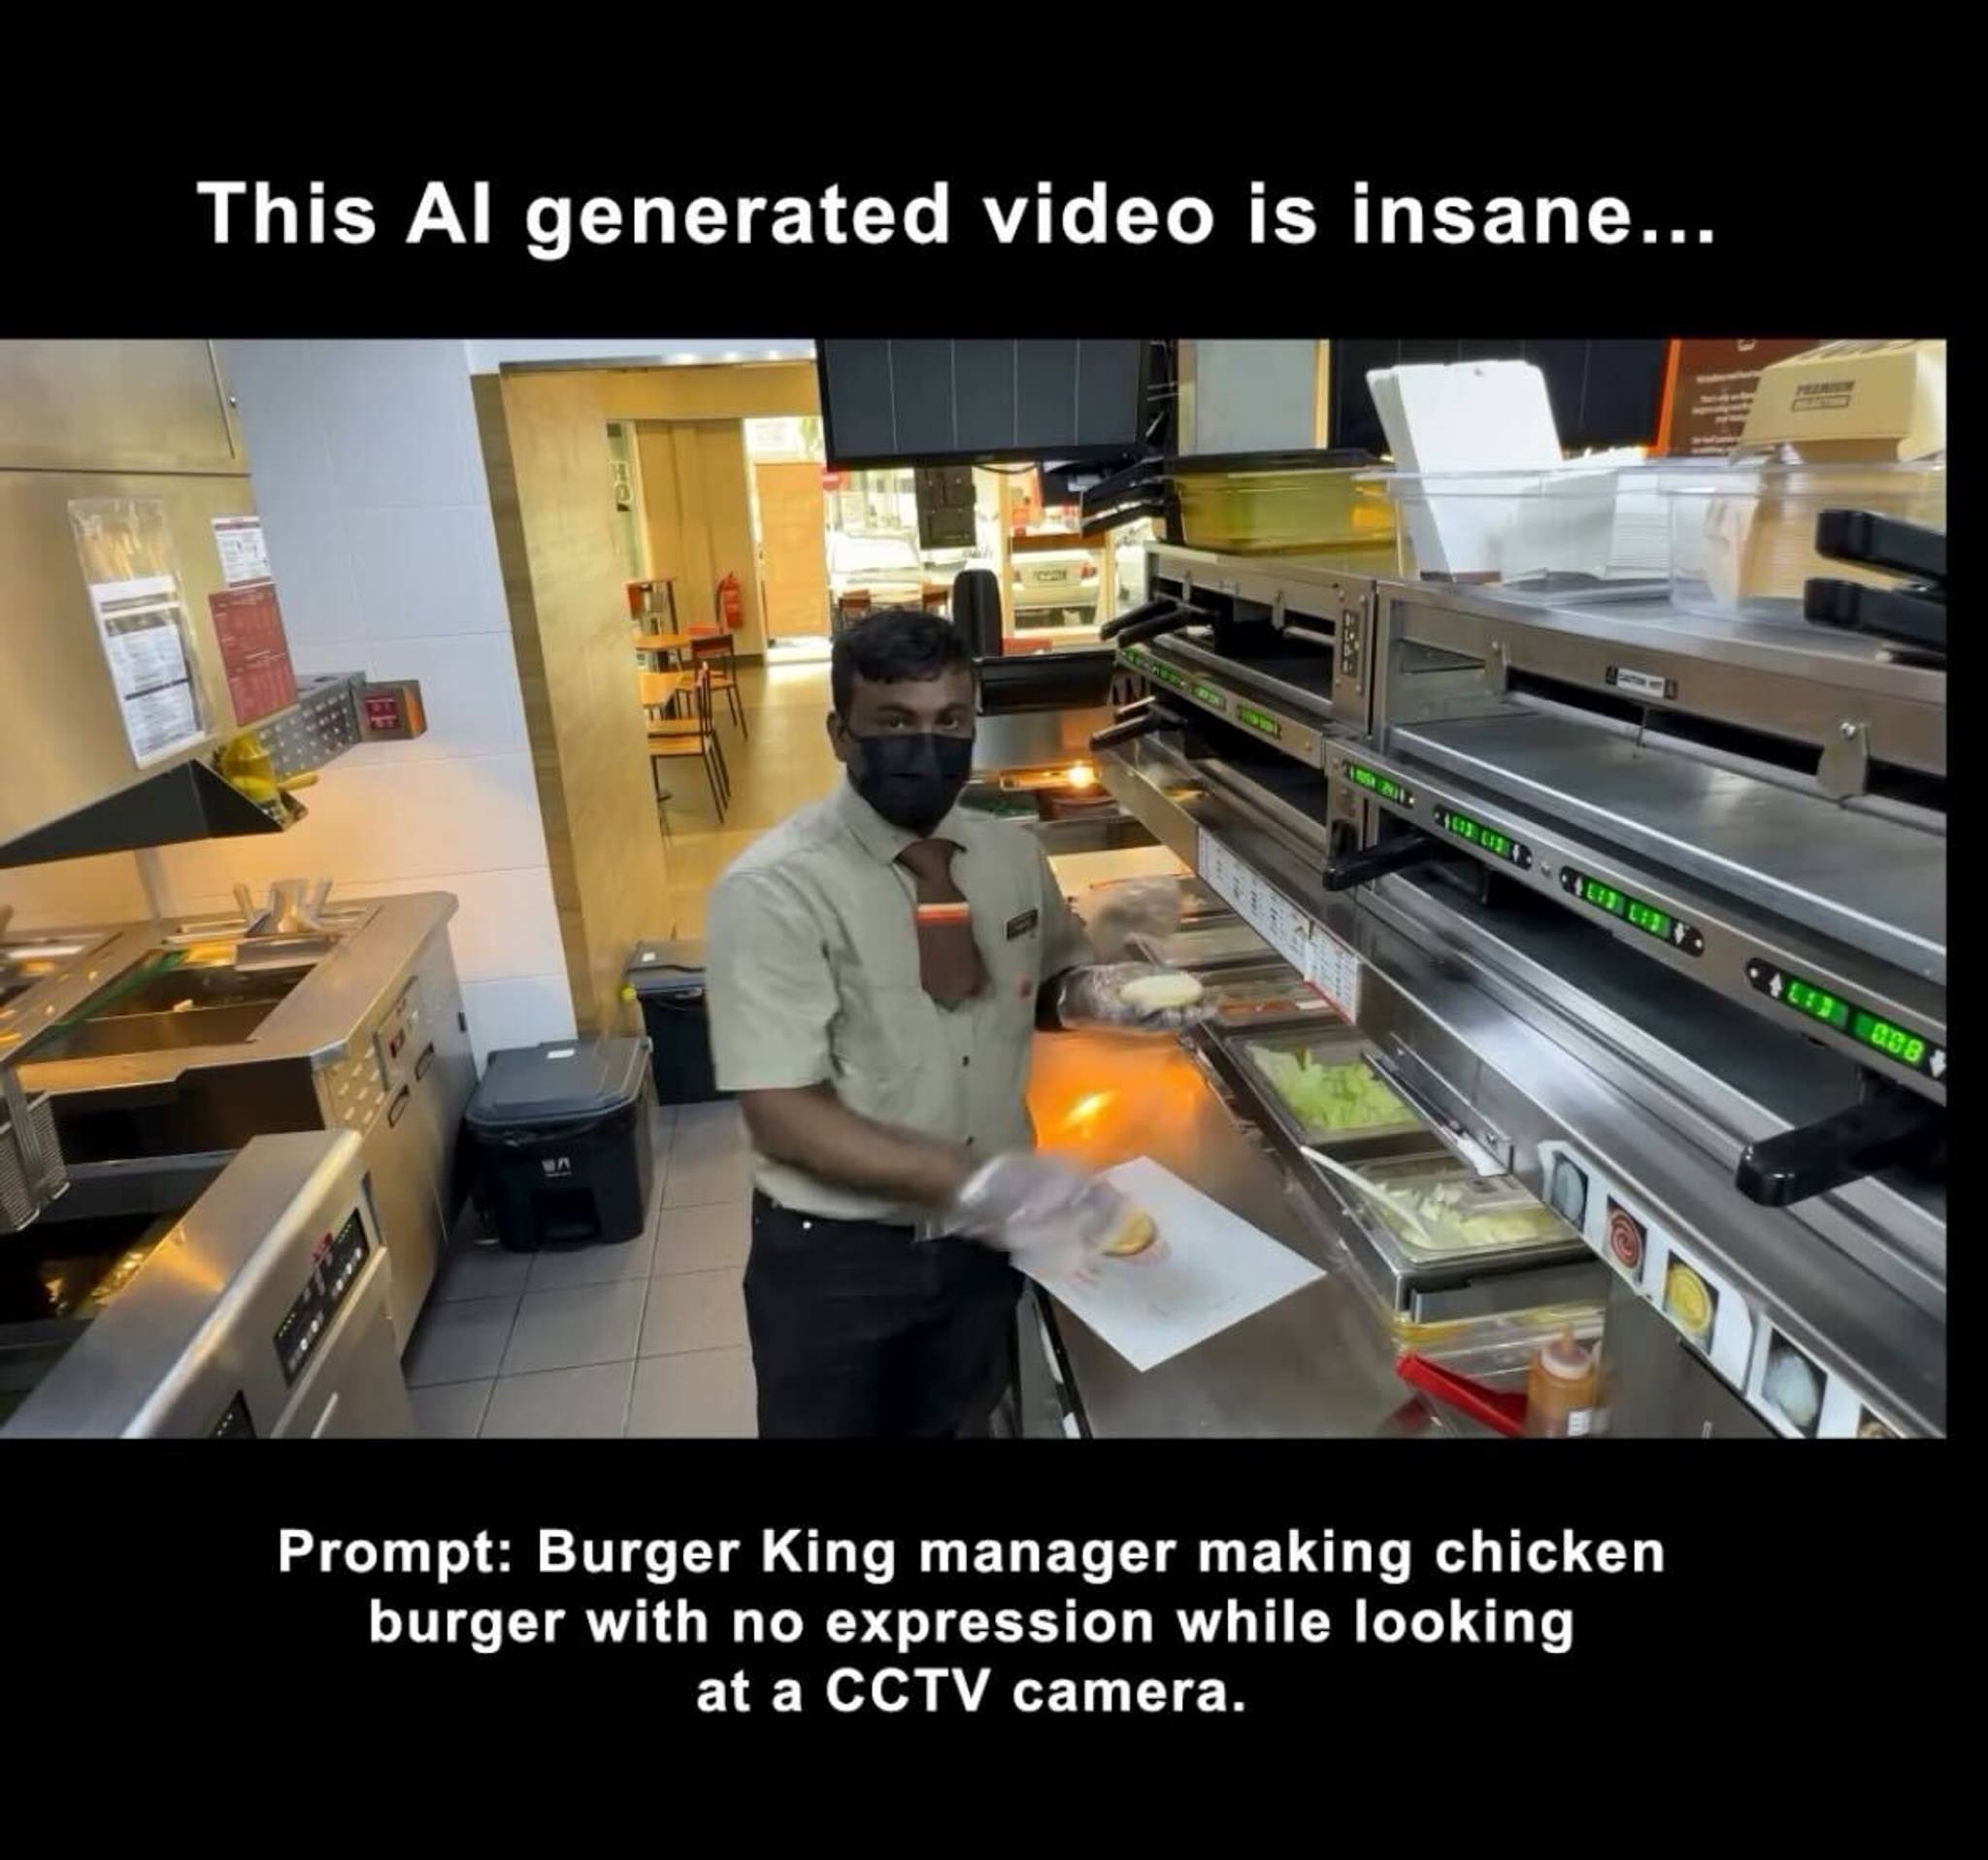 Burger King plays with AI anxieties via fake advert